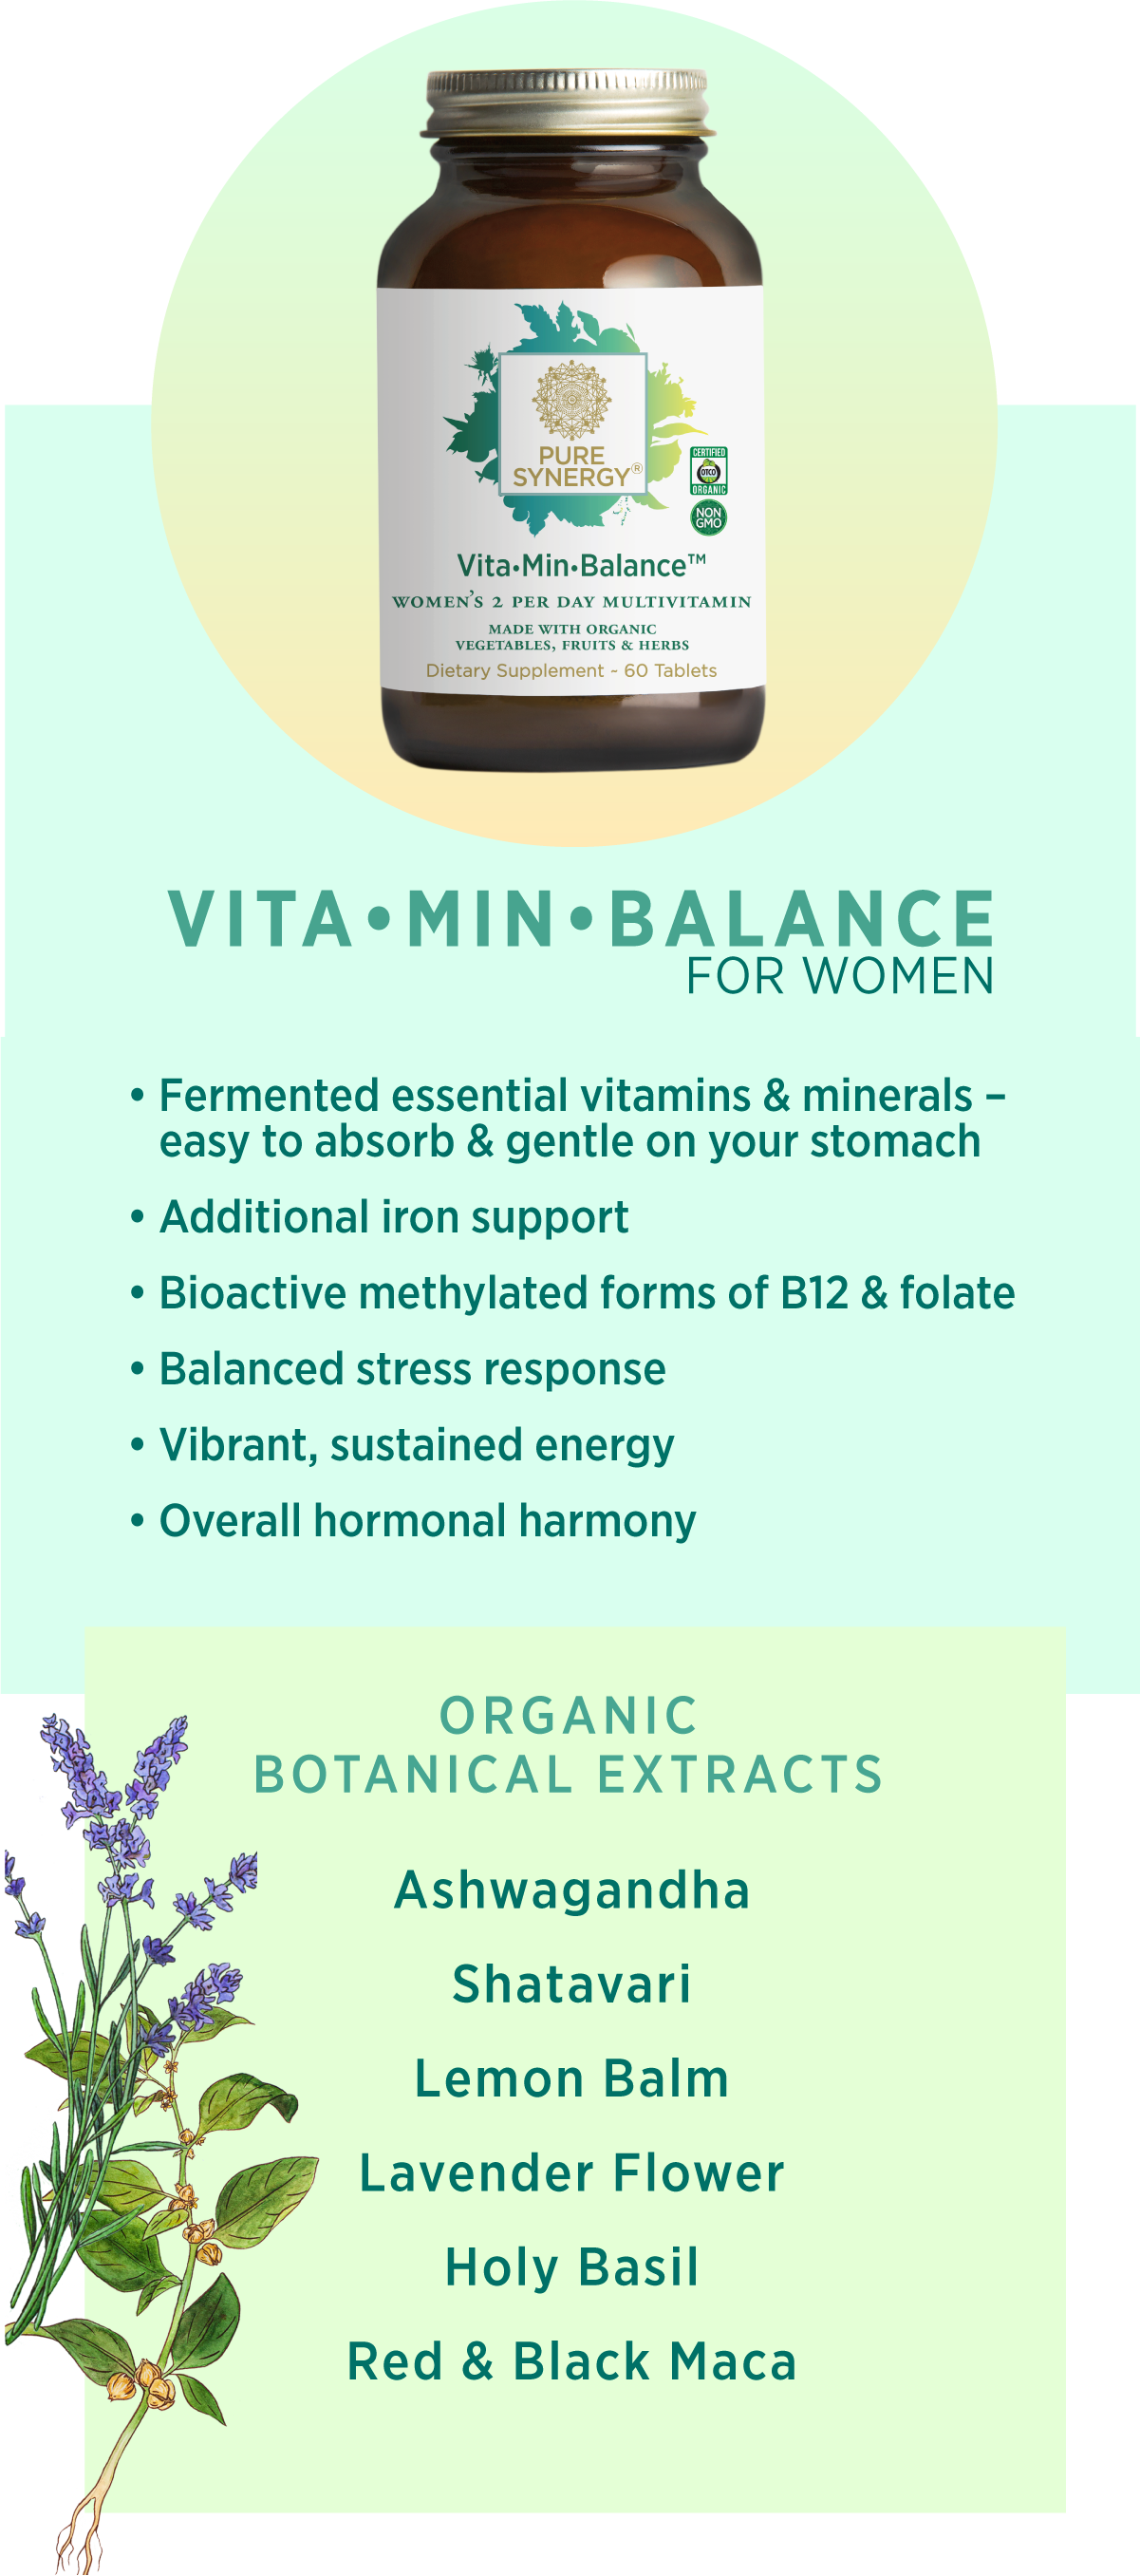 Vita Min Balance for Women product link